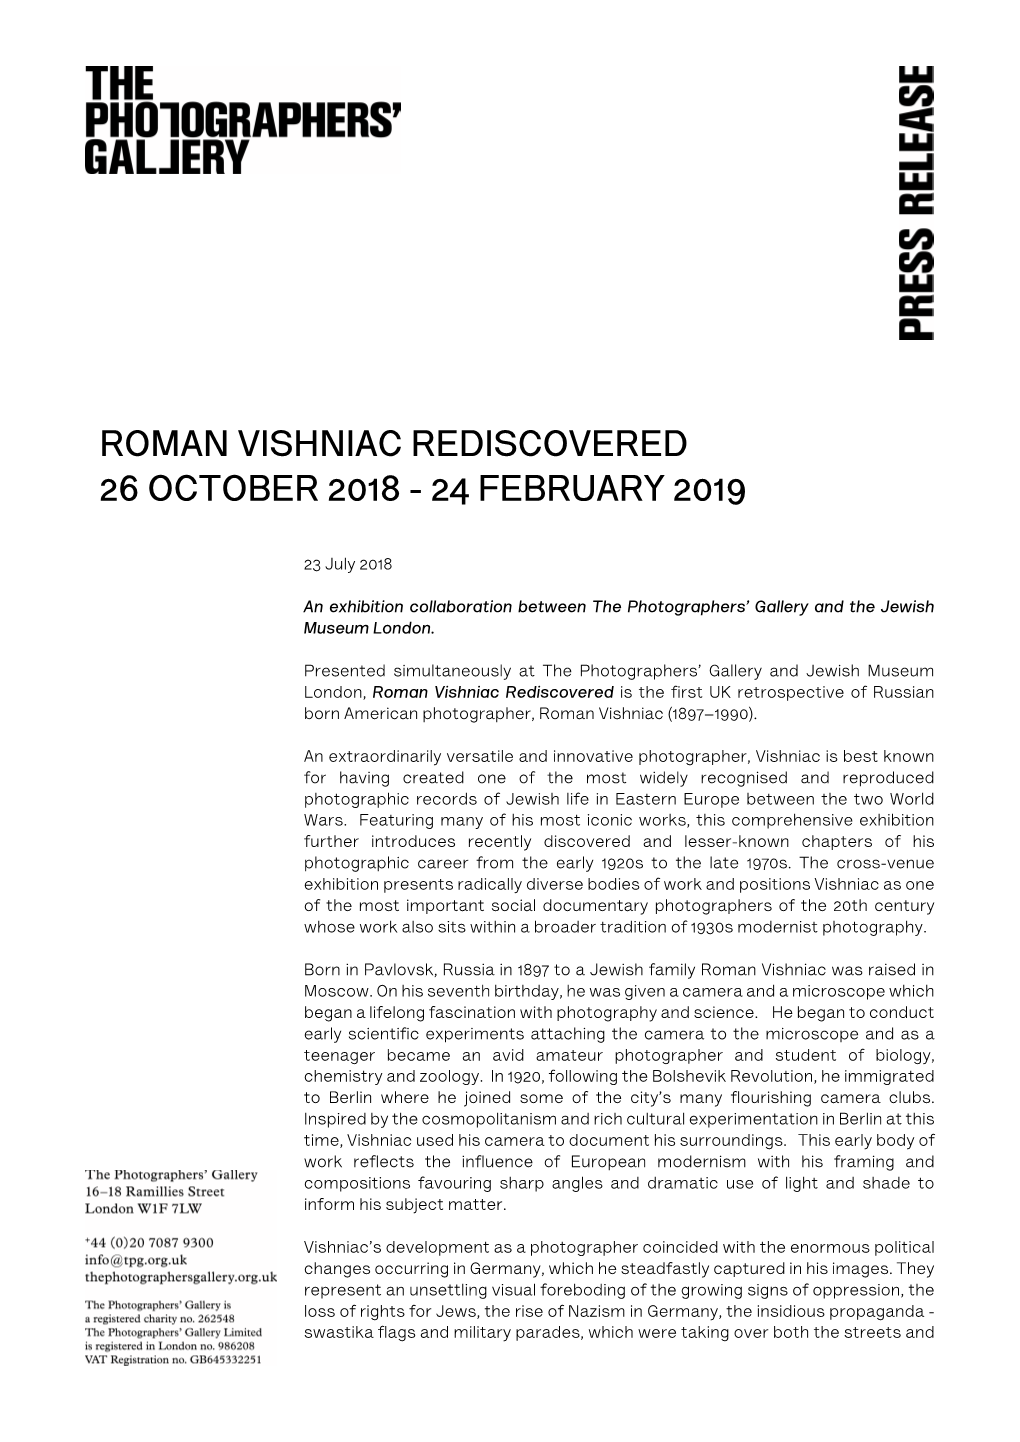 Roman Vishniac Rediscovered 26 October 2018 - 24 February 2019